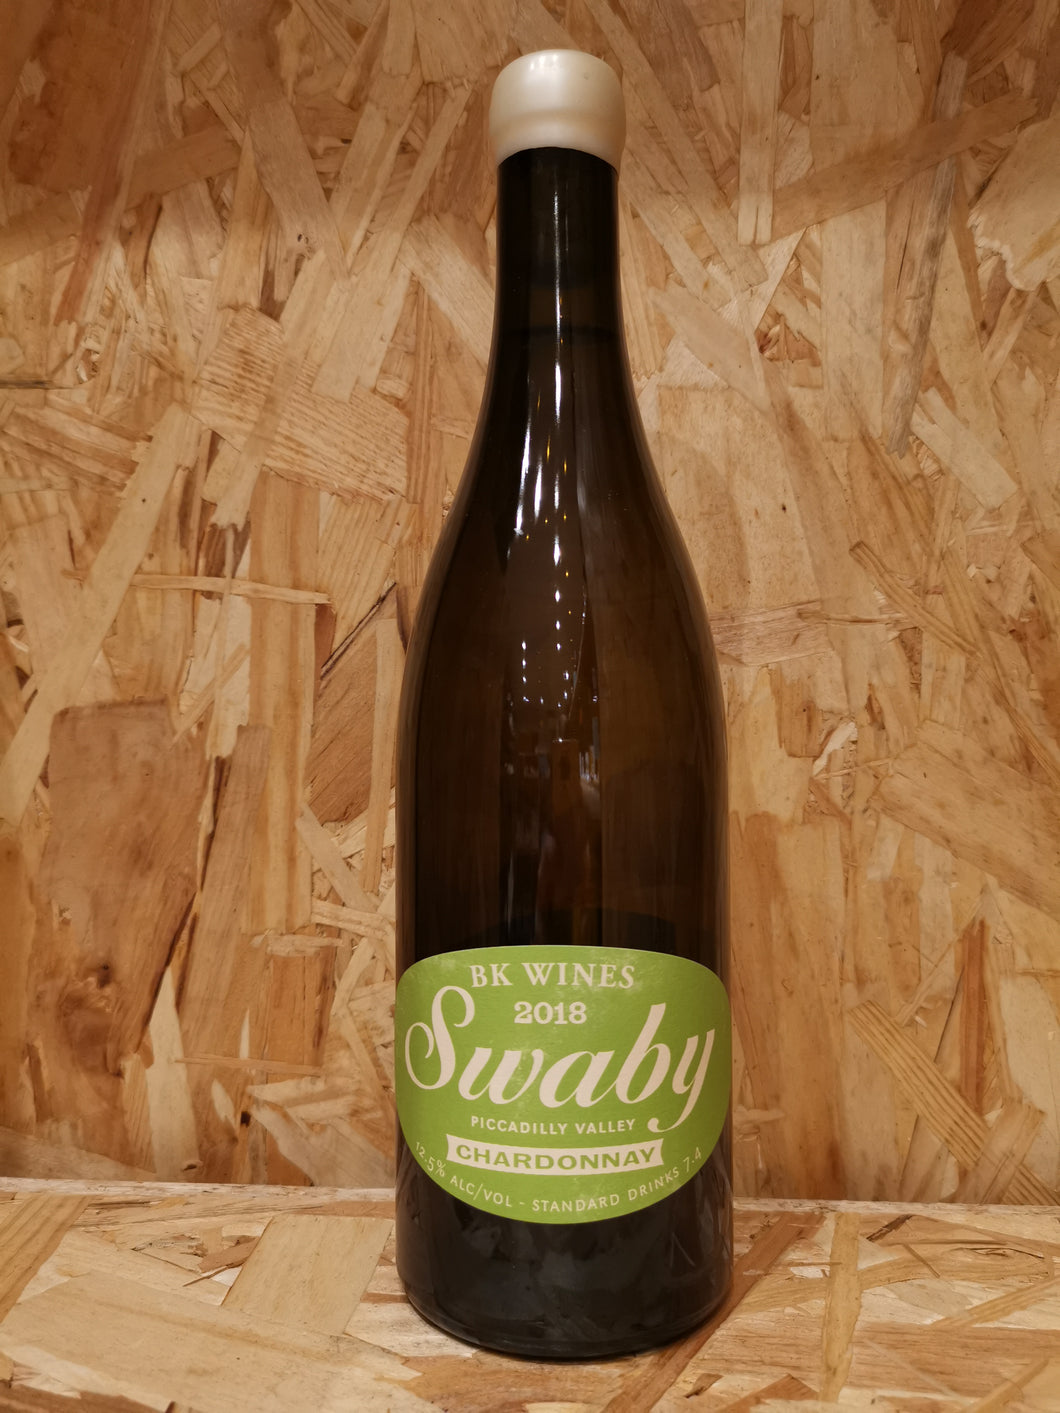 Swaby Chardonnay 2018 75cL